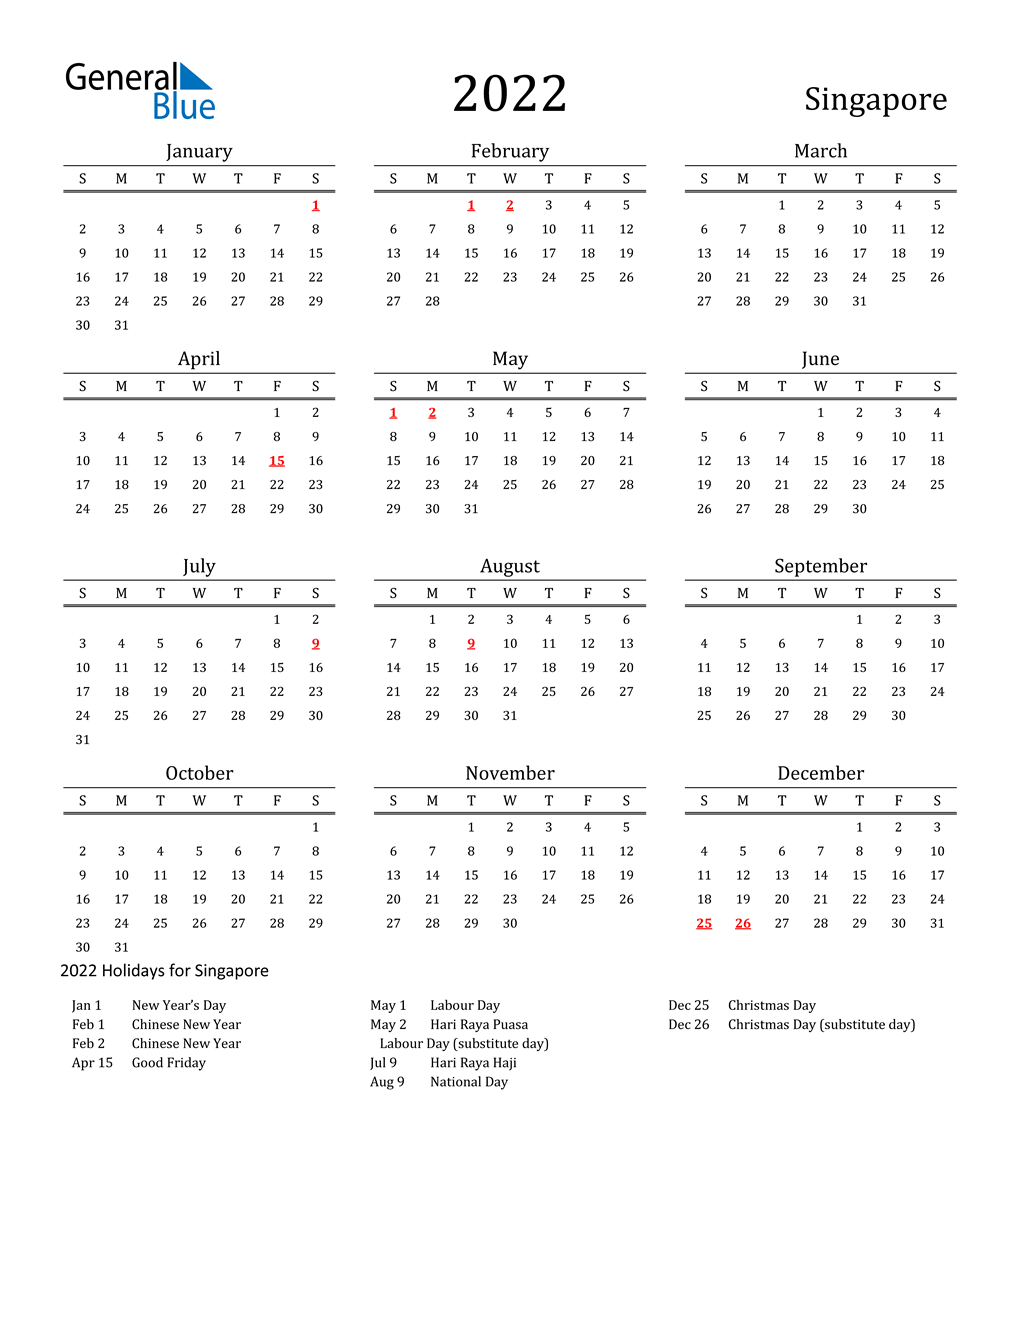 Mgh Holiday Calendar 2022 2022 Singapore Calendar With Holidays